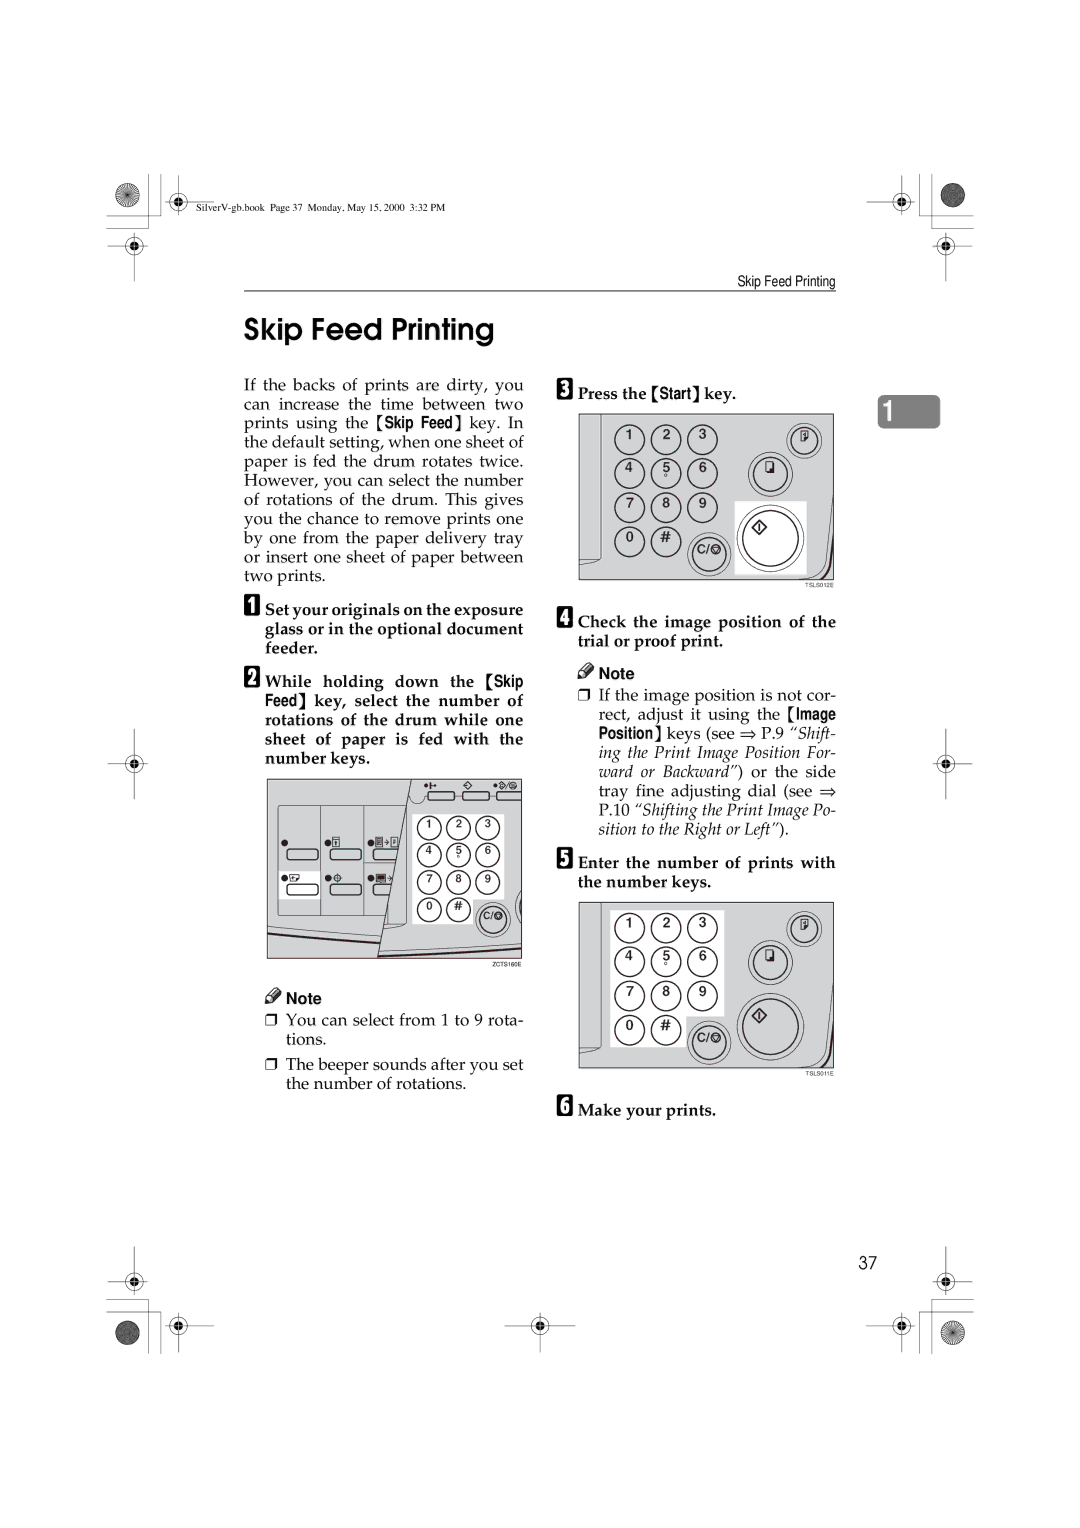 Ricoh JP1210/1250, Priport manual Skip Feed Printing 